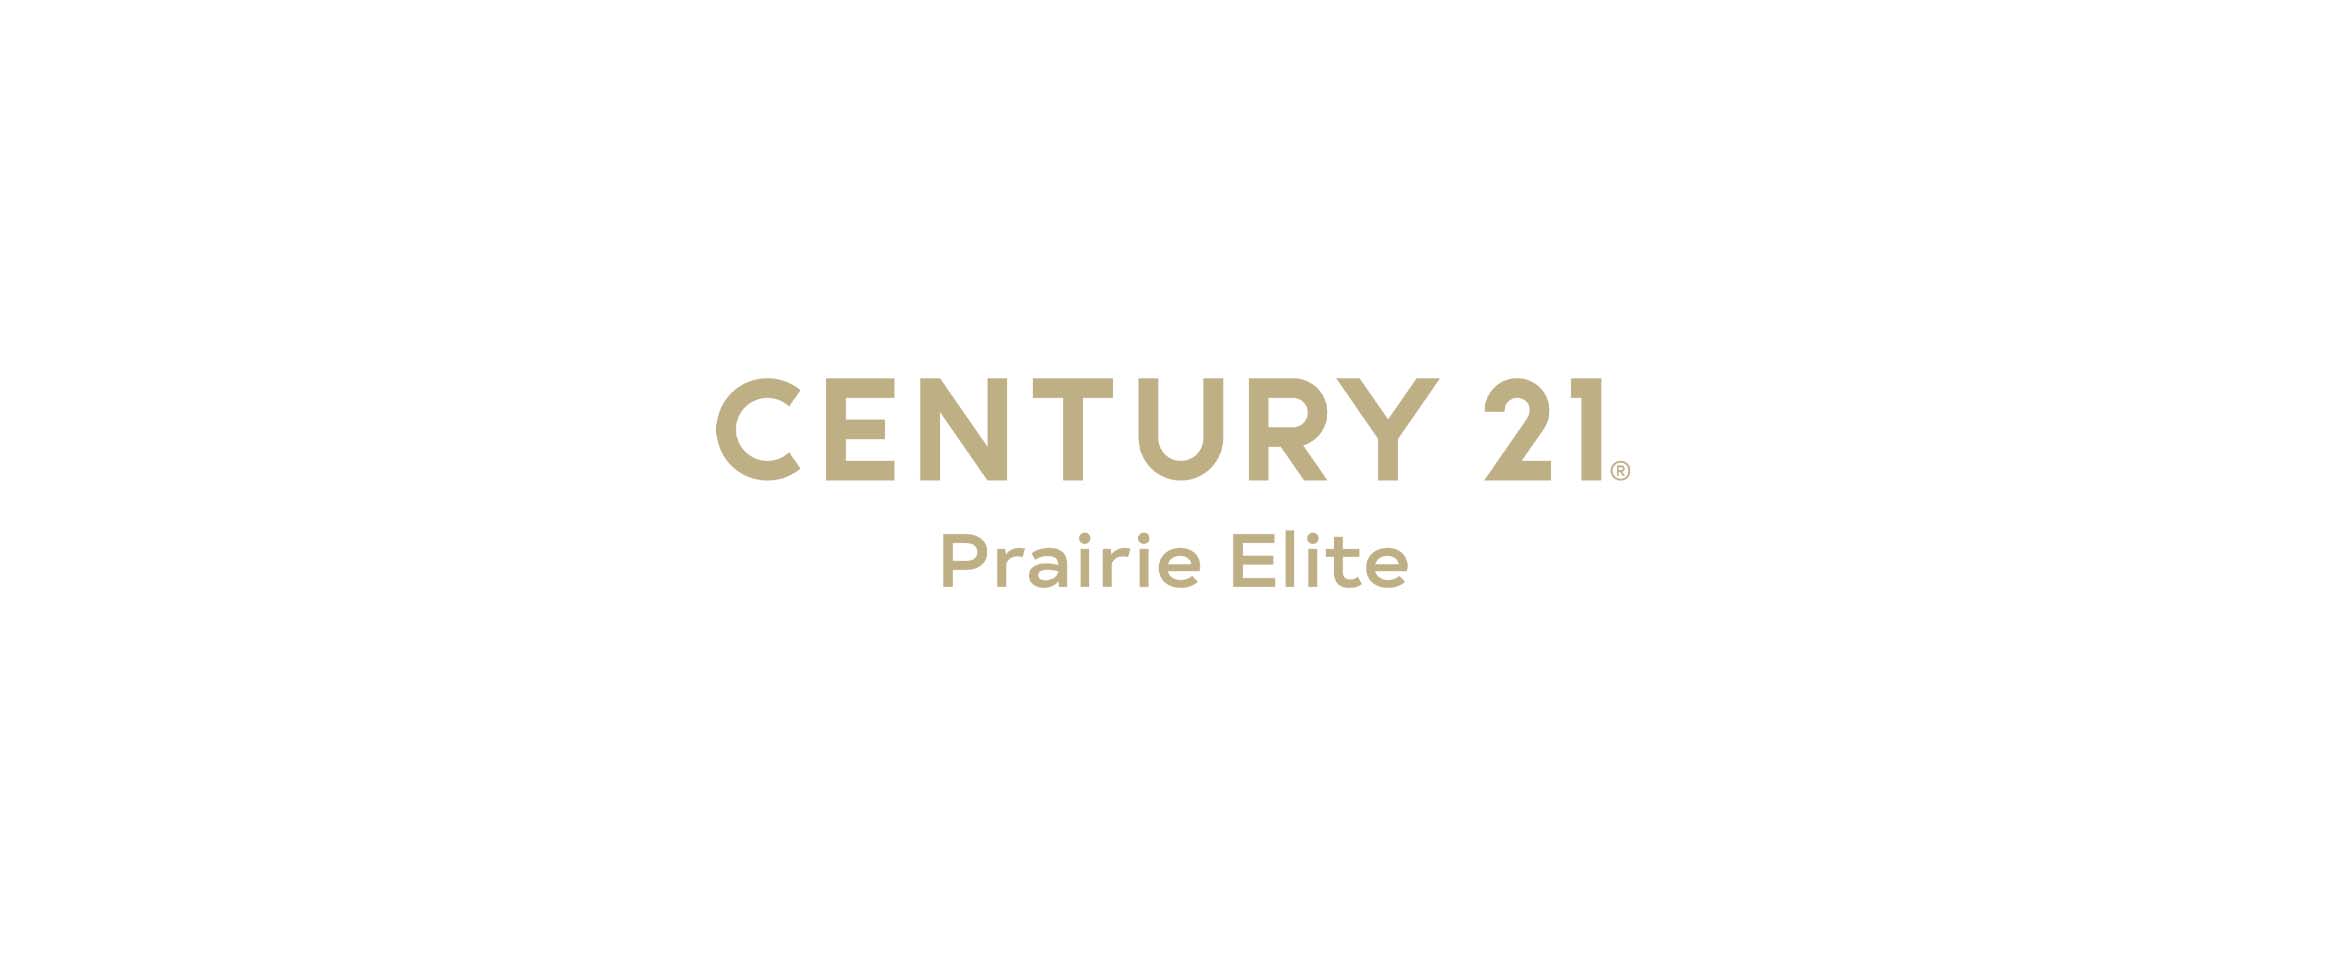 CENTURY 21 Prairie Elite